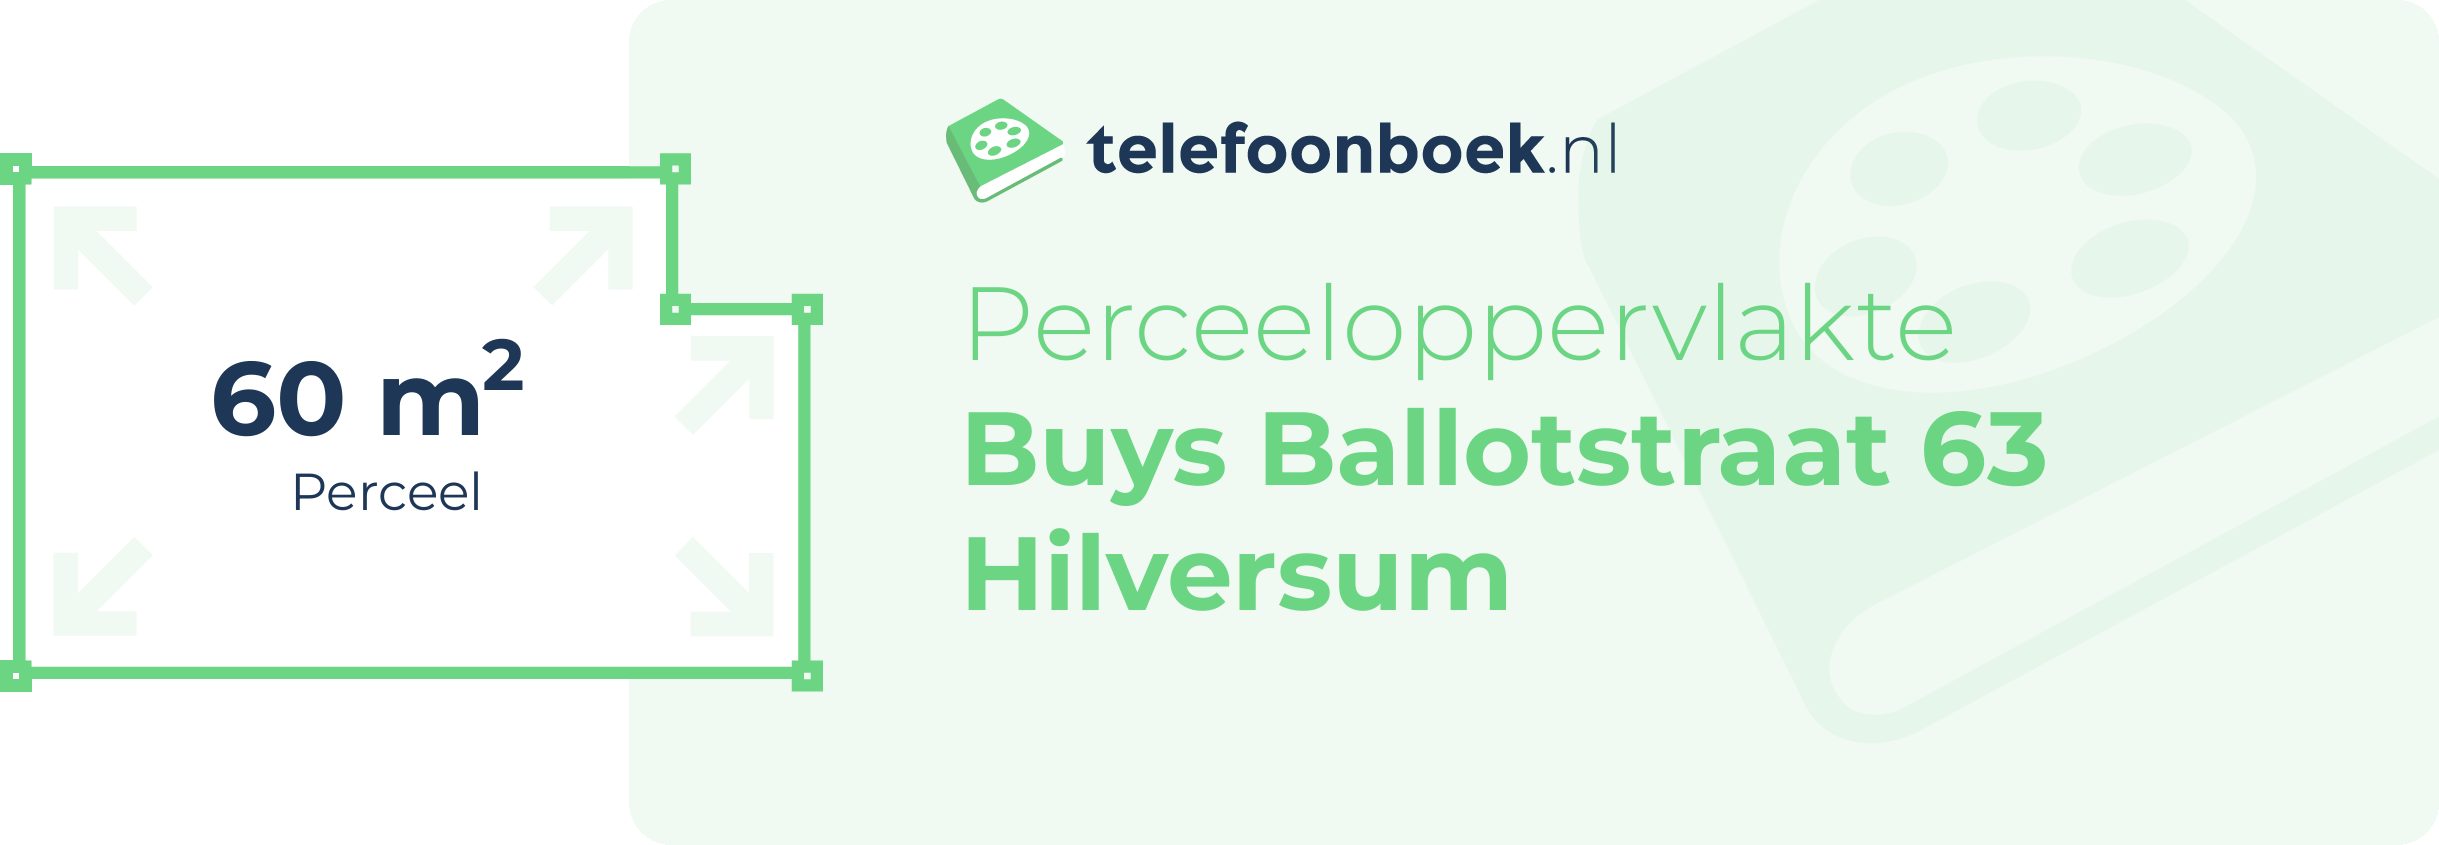 Perceeloppervlakte Buys Ballotstraat 63 Hilversum